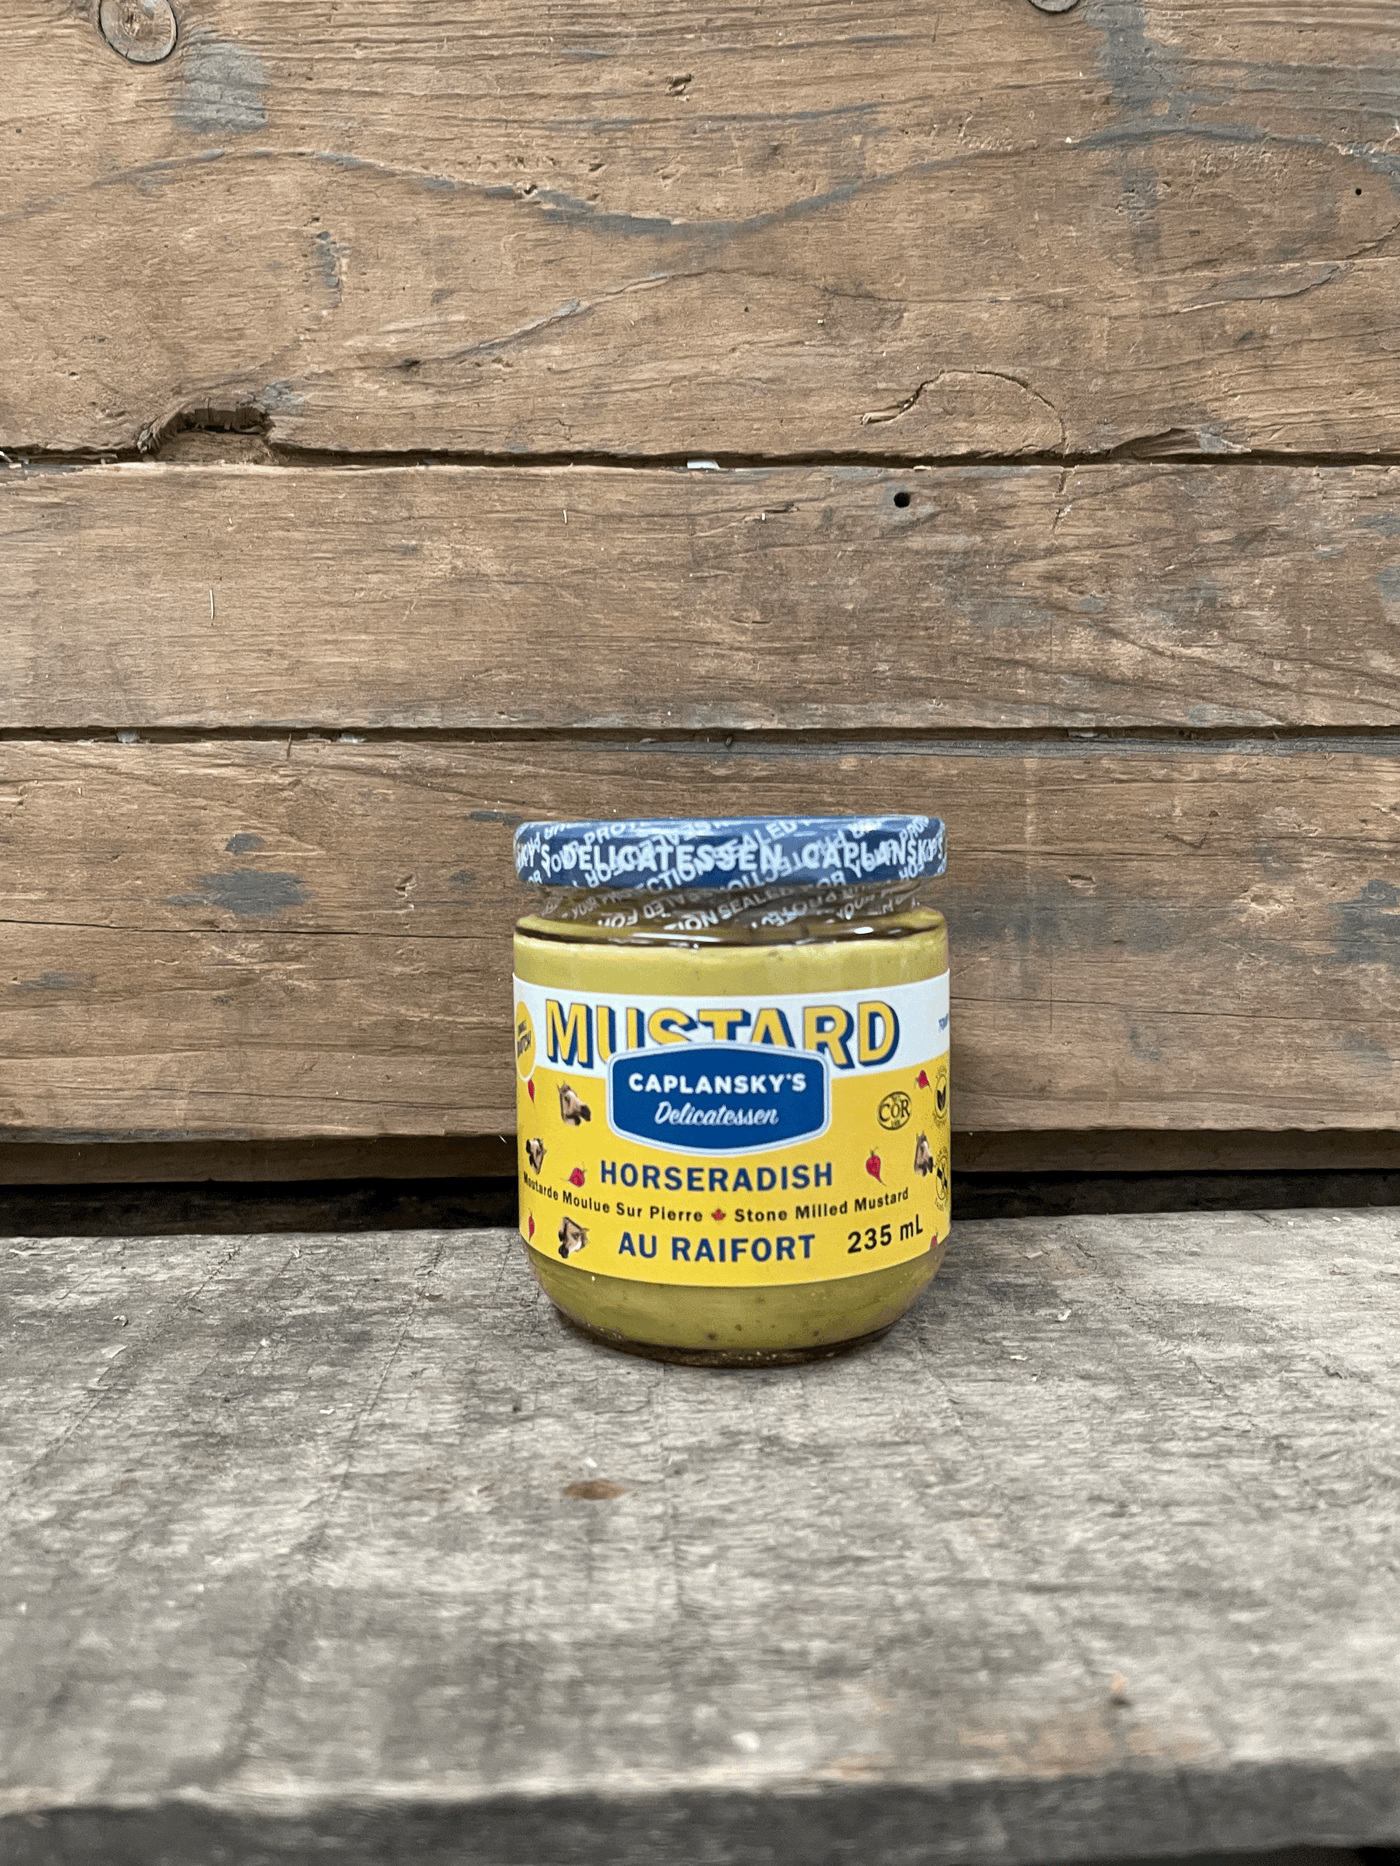 Caplansky's Delicatessen Horseradish Mustard